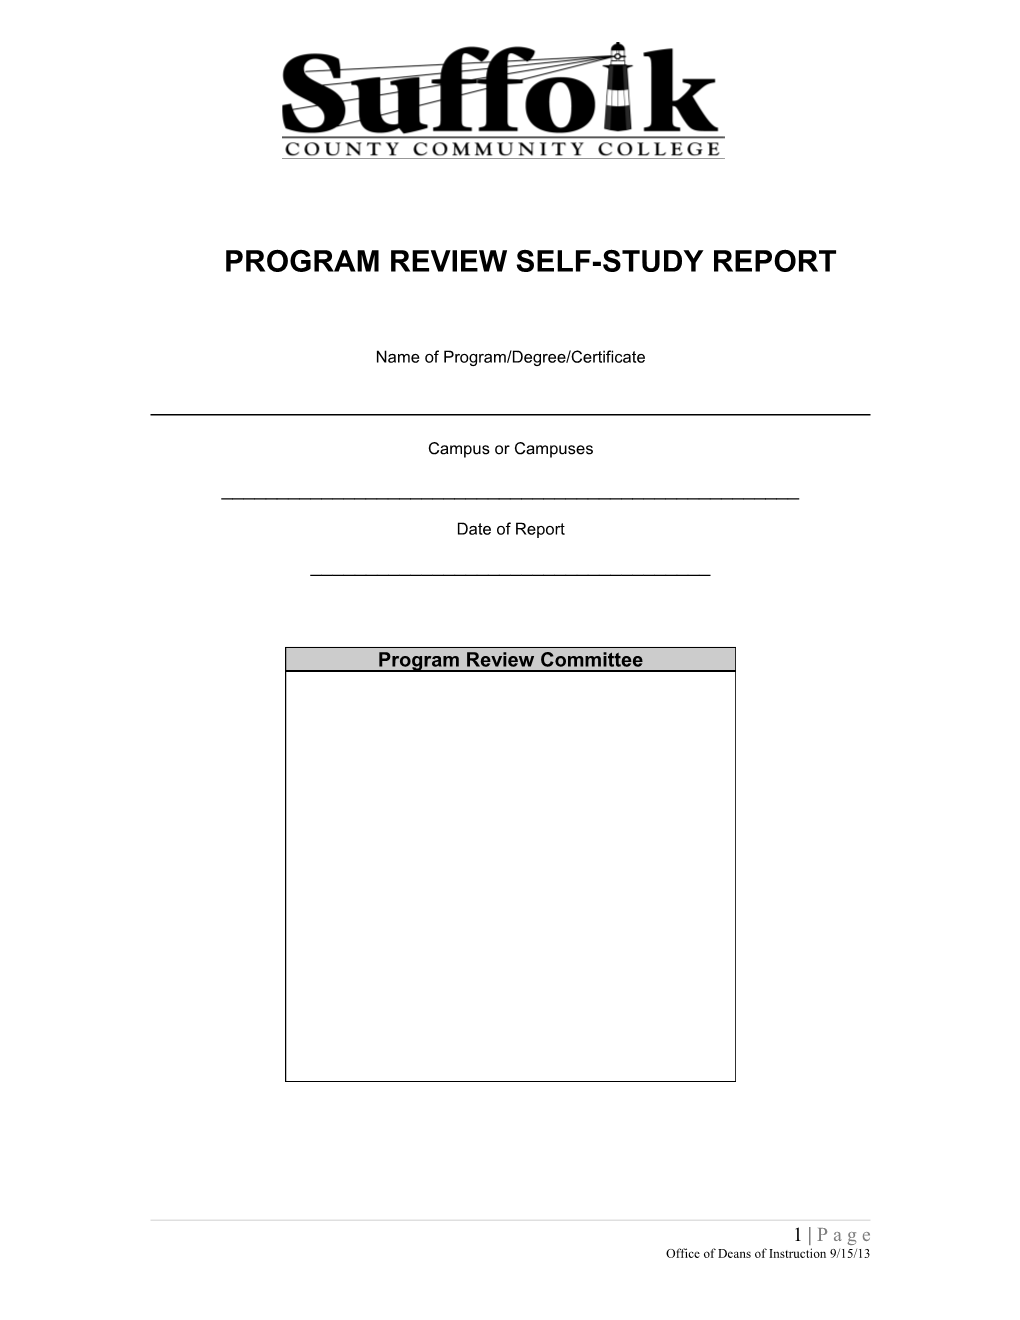 Program Review Self-Study Report